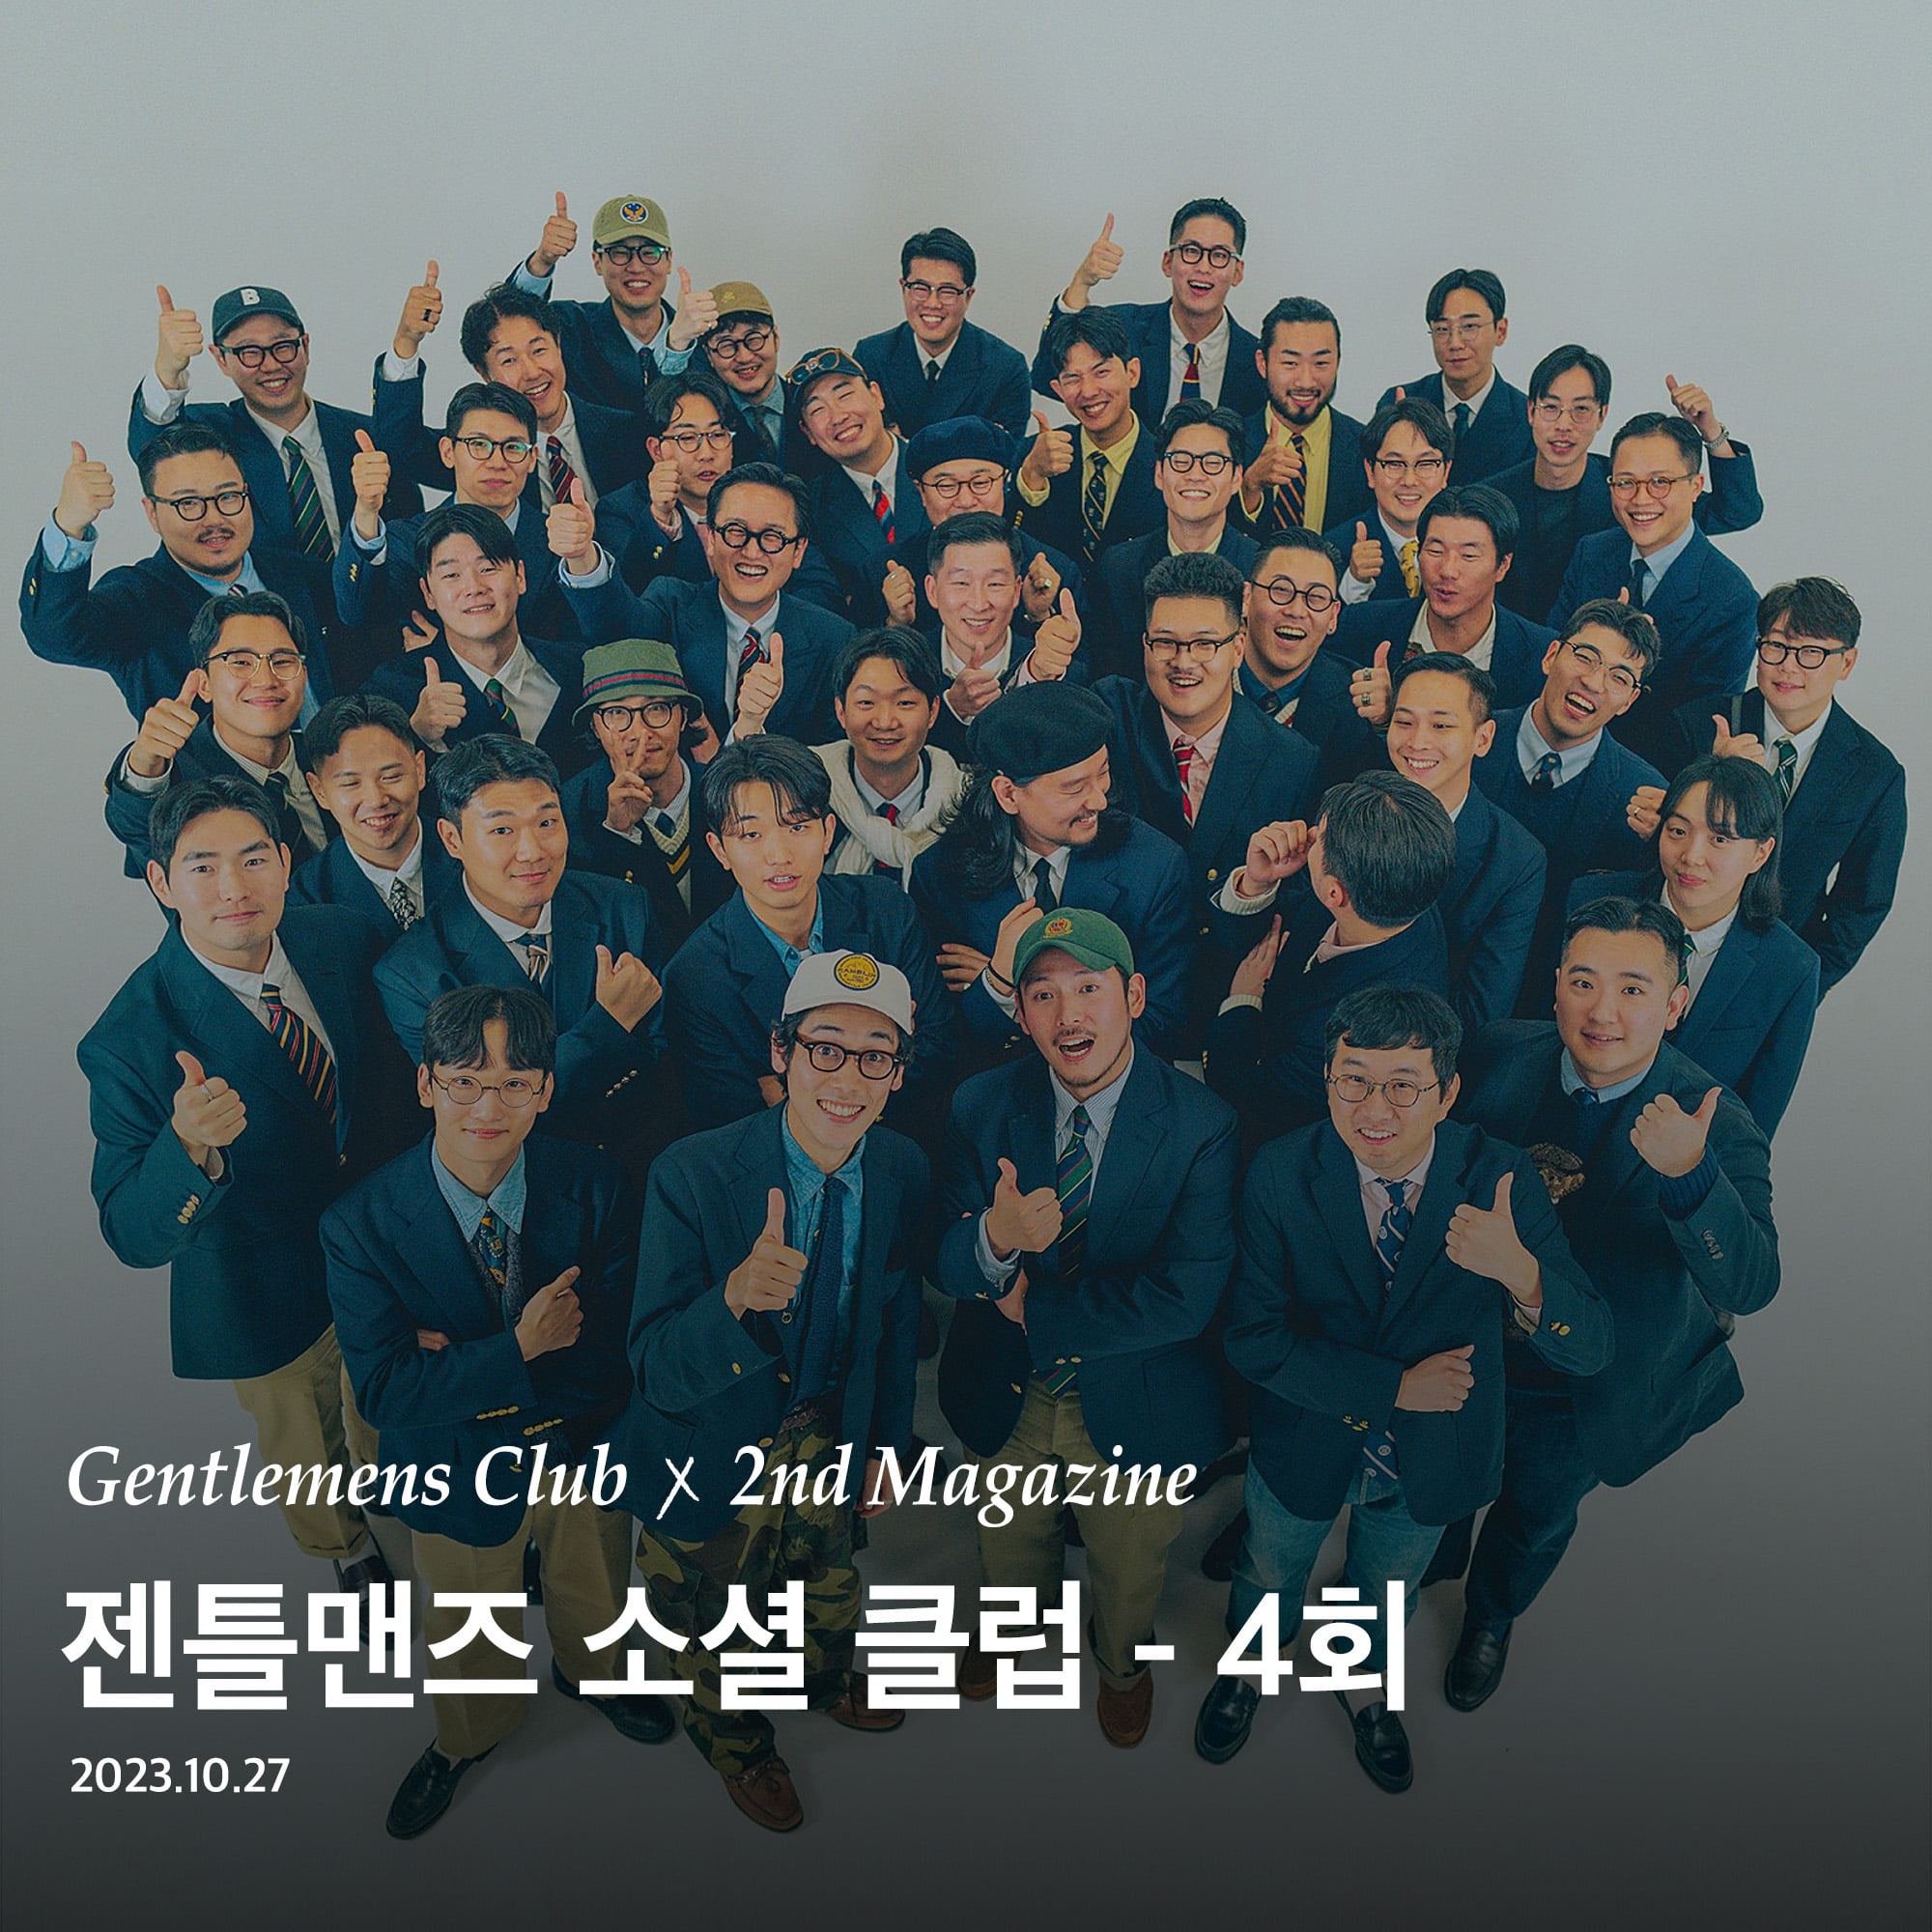 4th Gentlemens Social Club X 2nd Magazine - 2023.10.27리넥츠